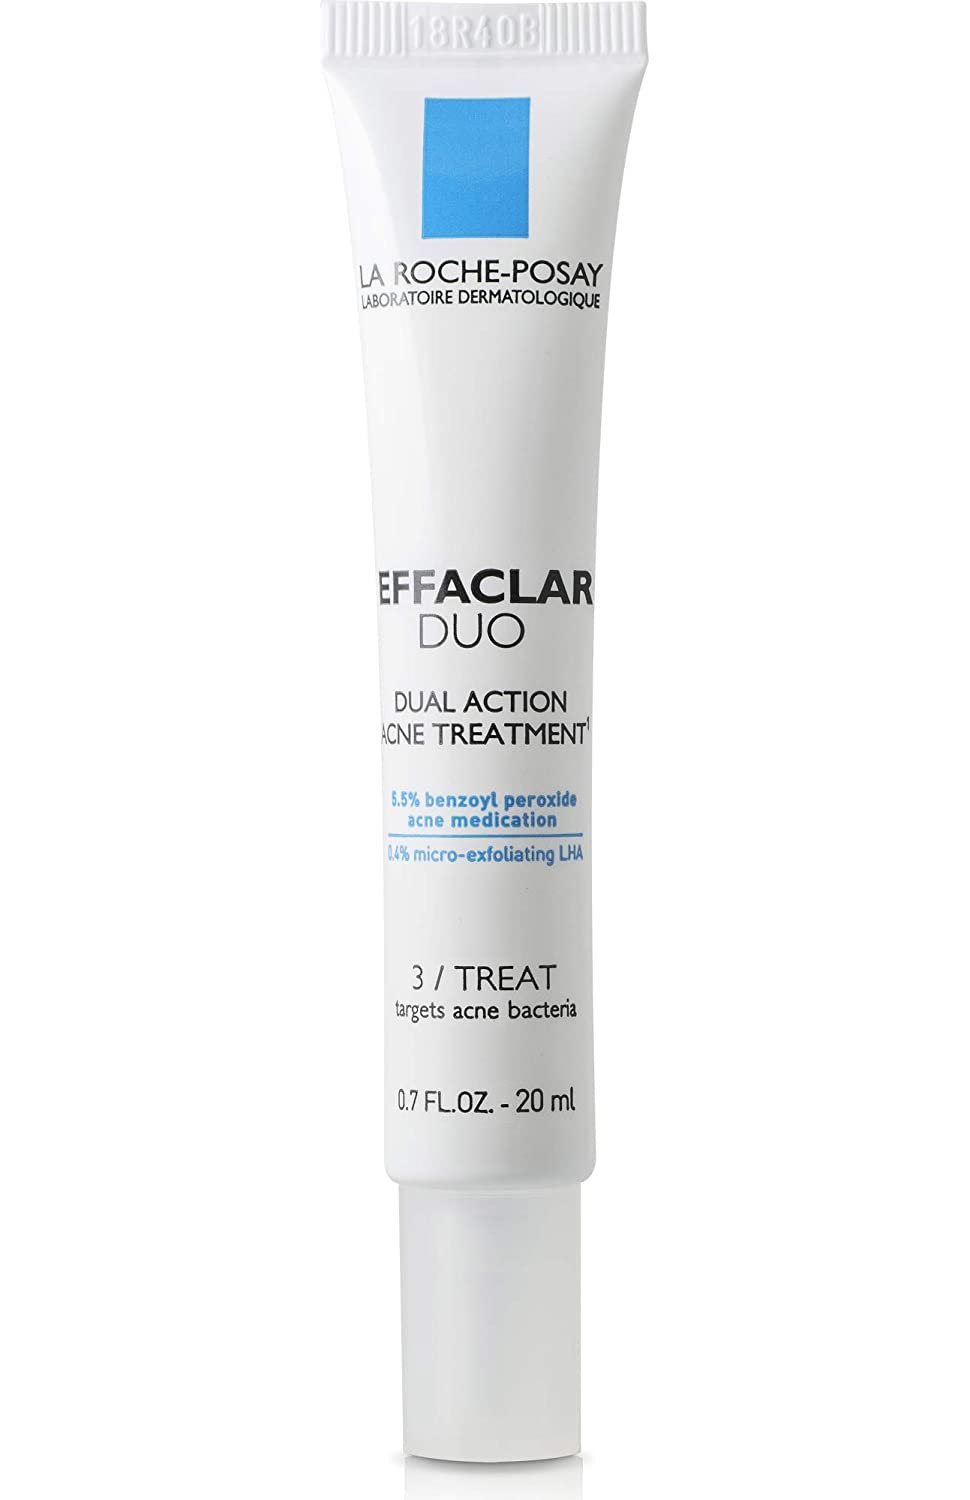 La Roche-Posay Effaclar Duo Dual Action Acne Treatment Cream with Benzoyl Peroxide